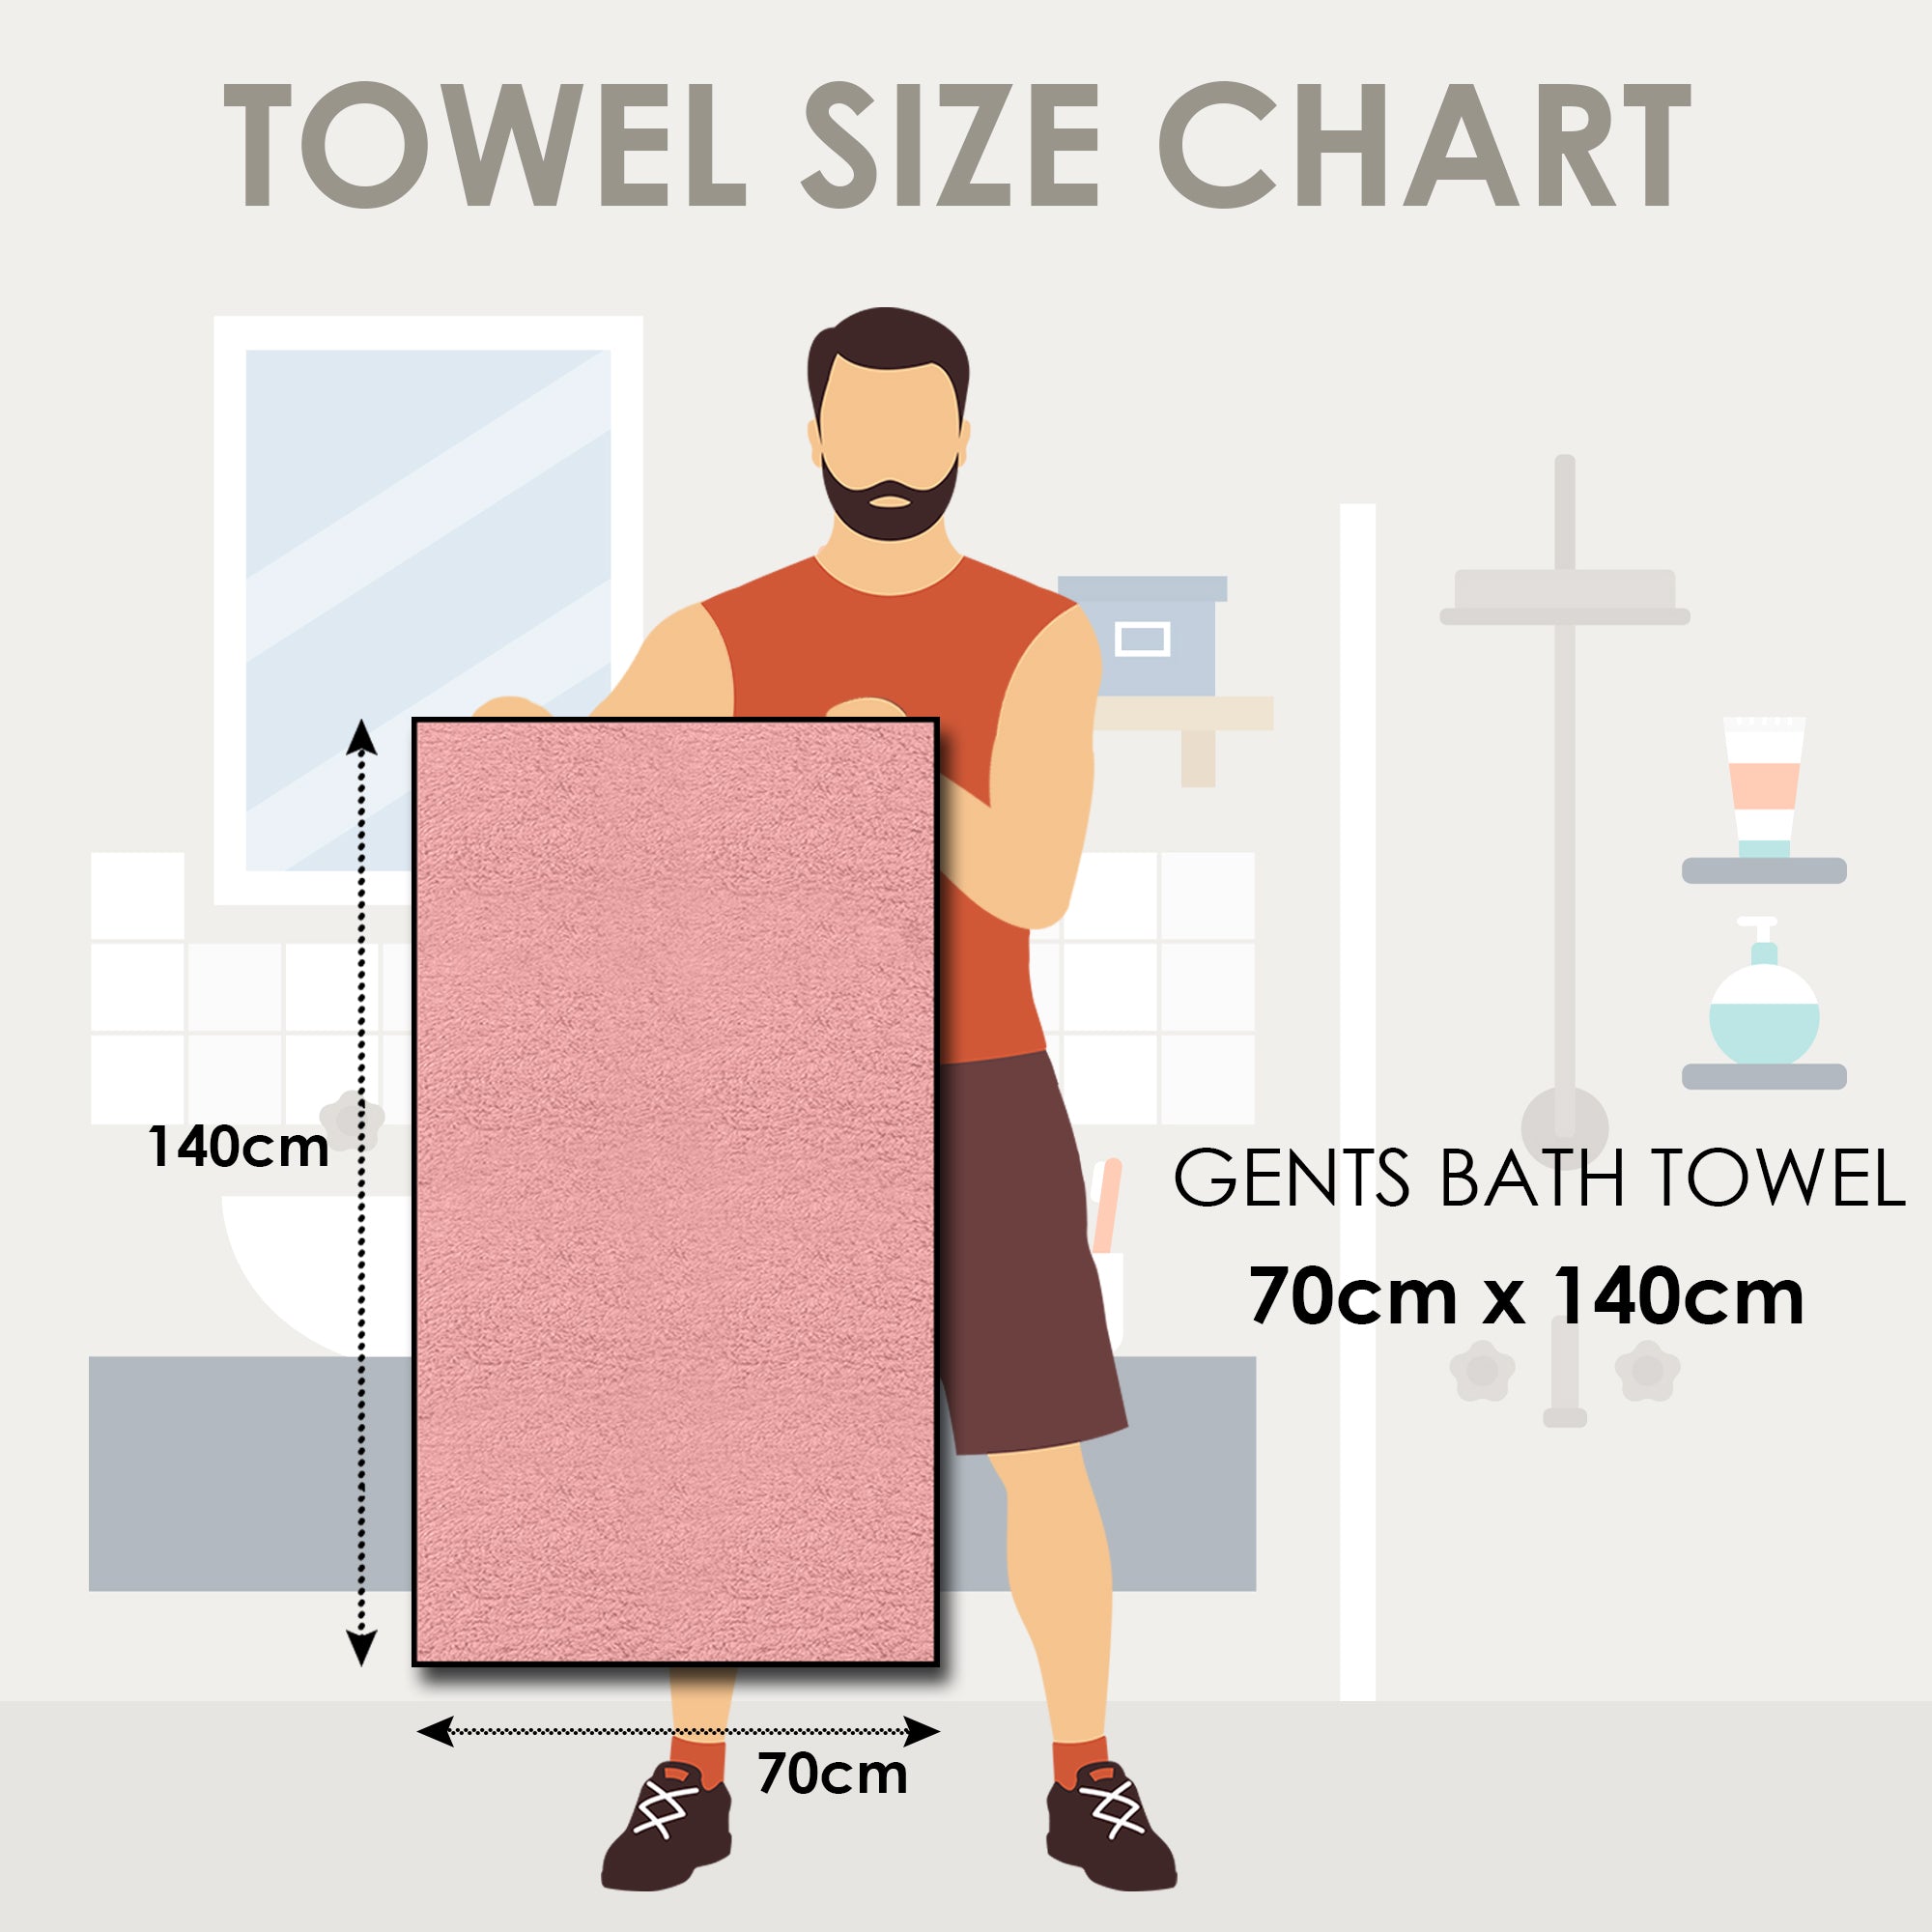 Story@Home 2 Units 100% Cotton Bath Towels - Green